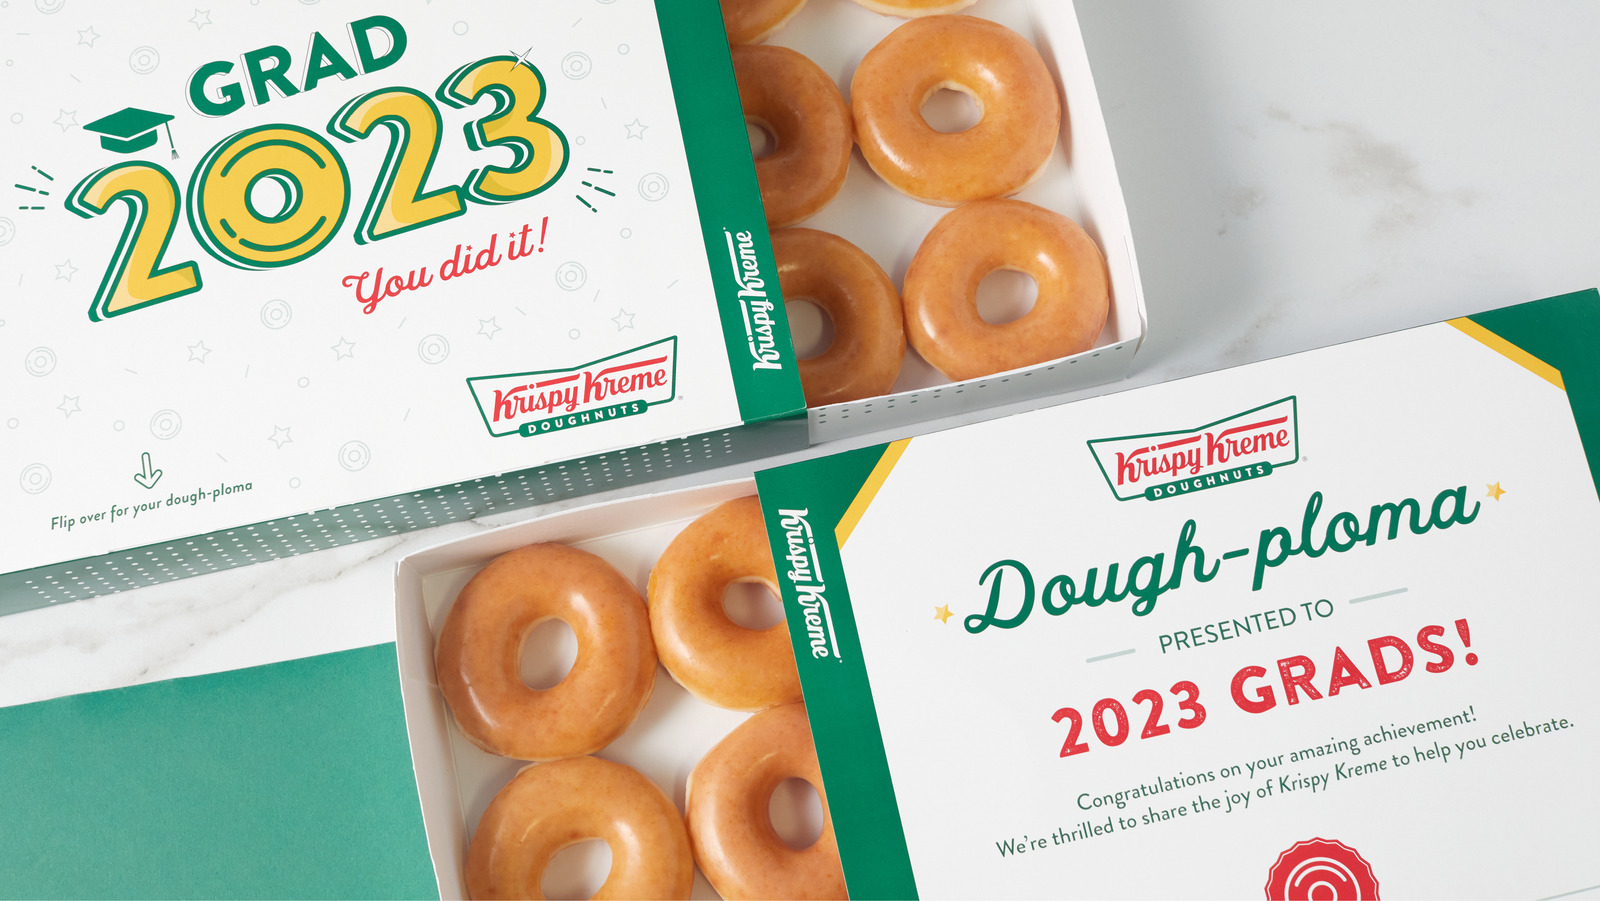 Krispy Kreme's Exclusive Graduation Deal Is Returning For 2023